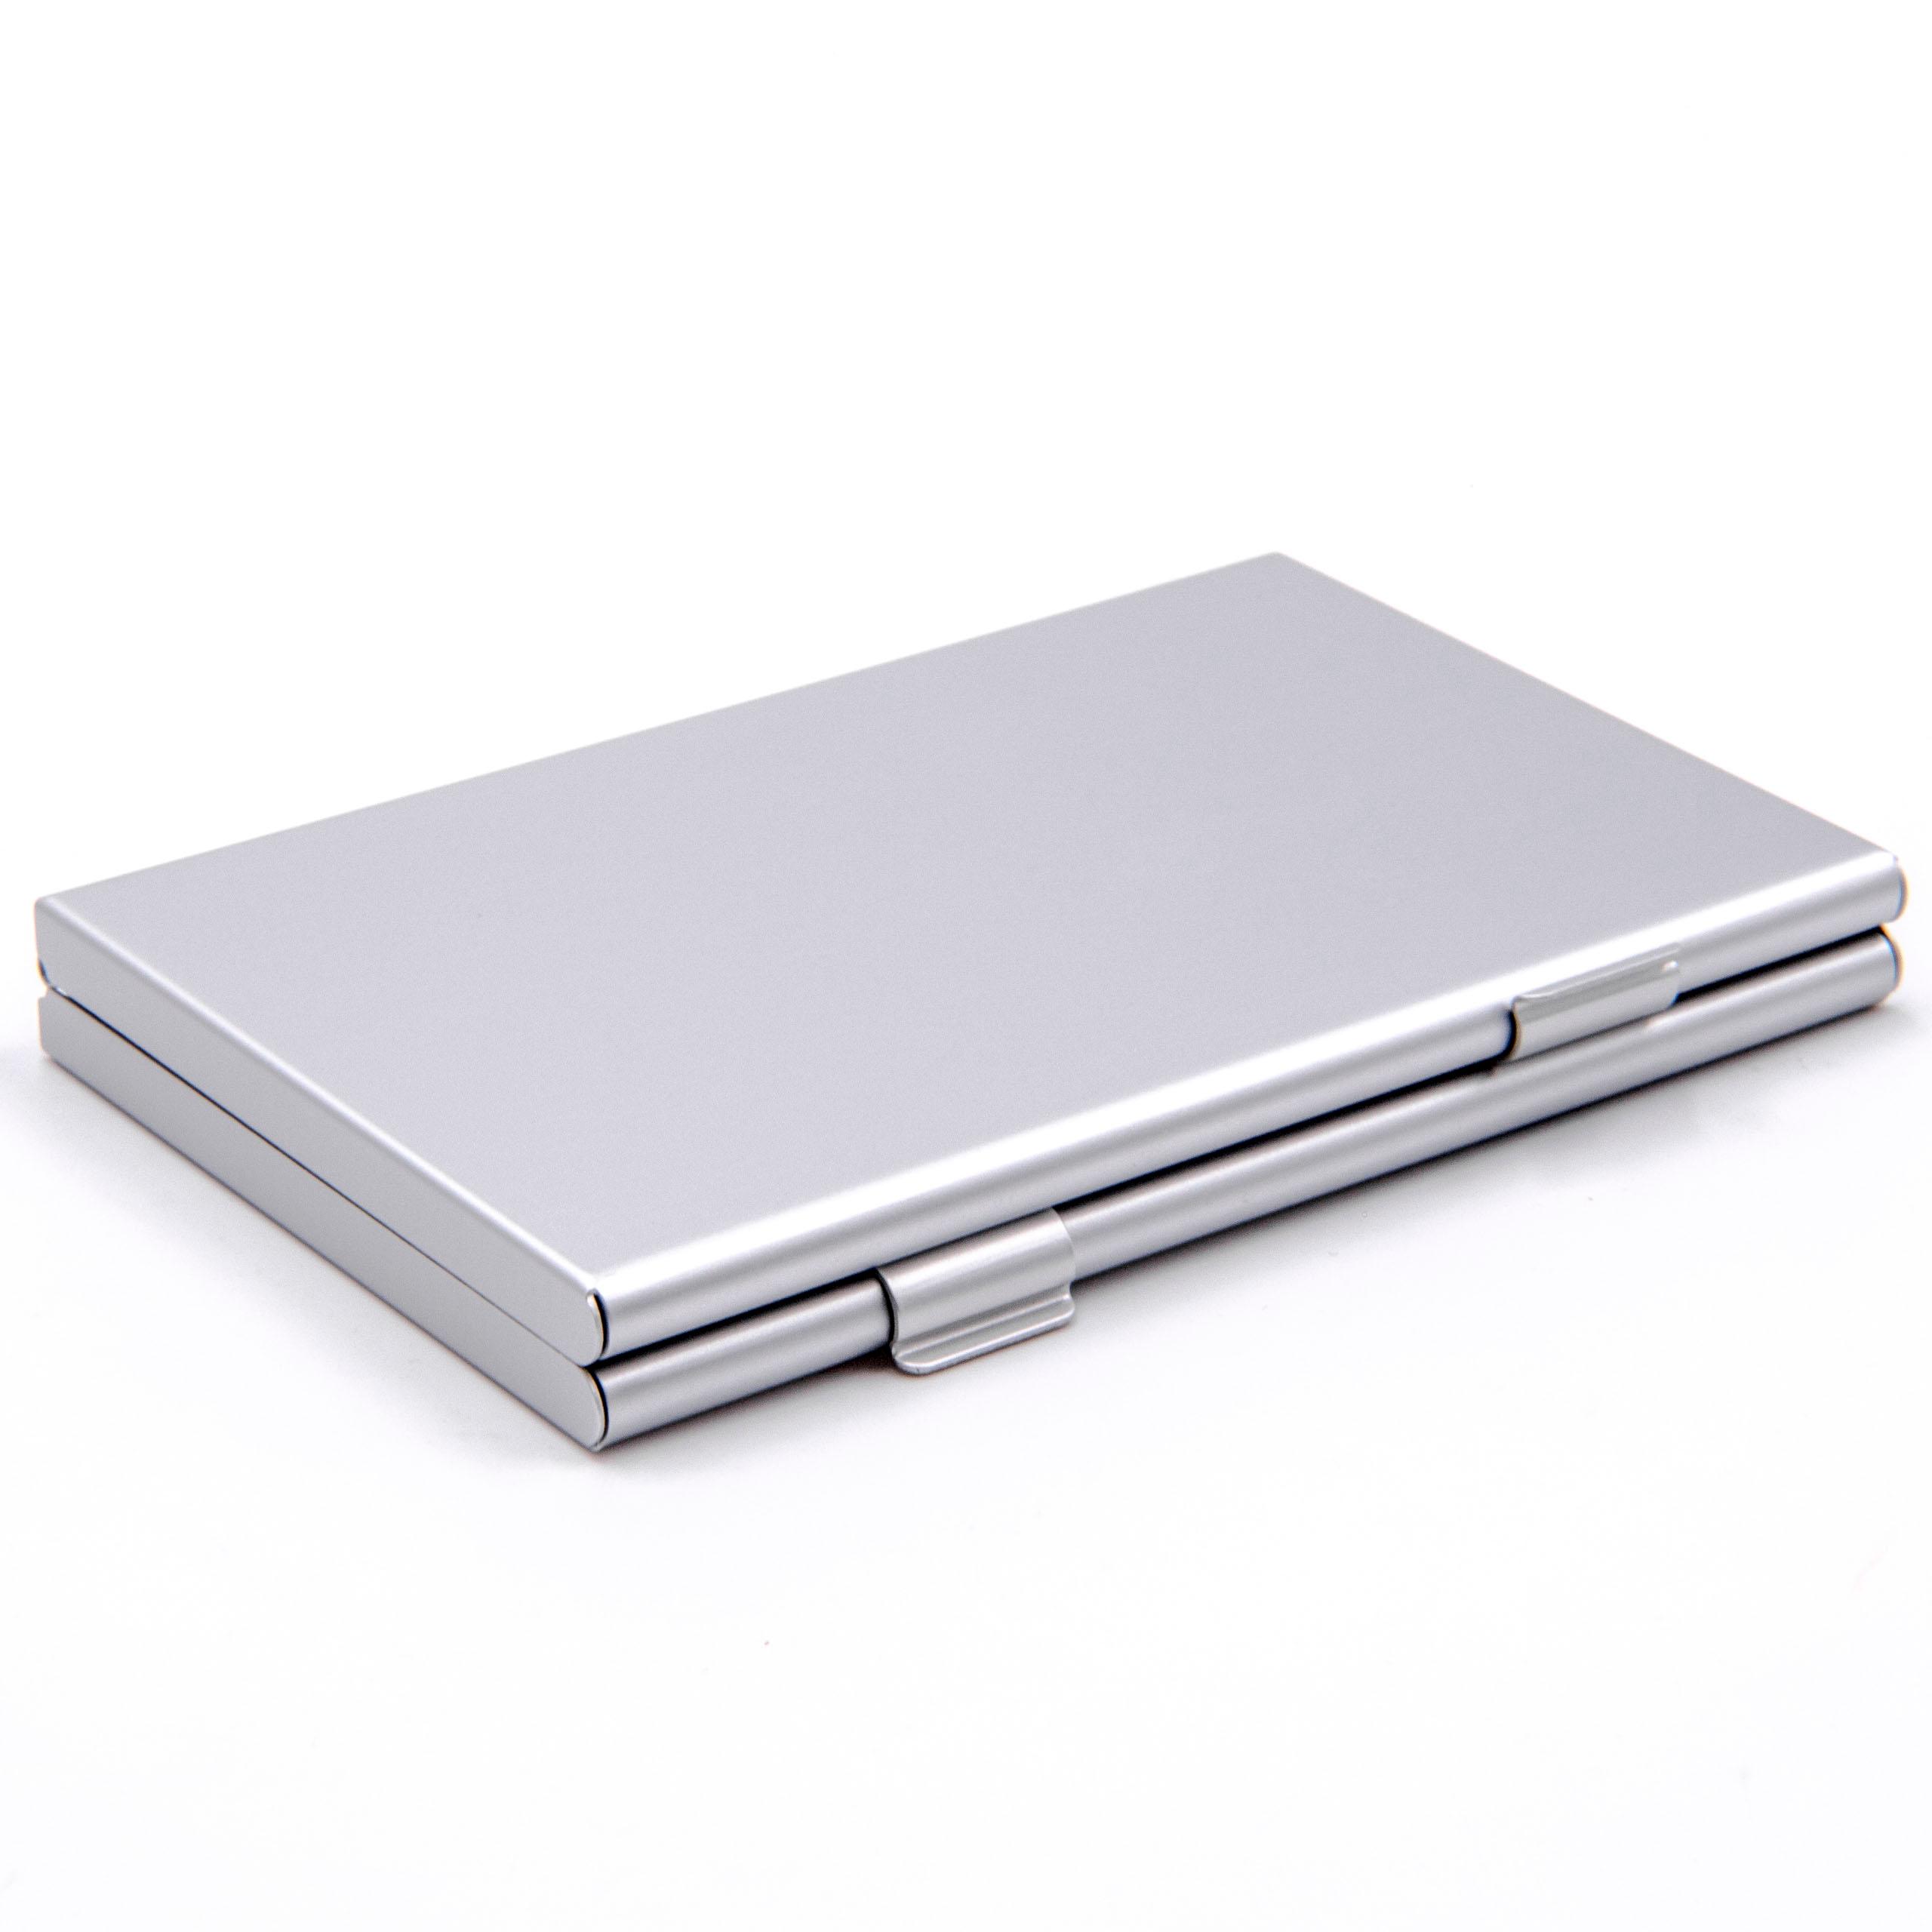 Etui passend für SIM-Karten 8x microSIM - Case, Aluminium, silber